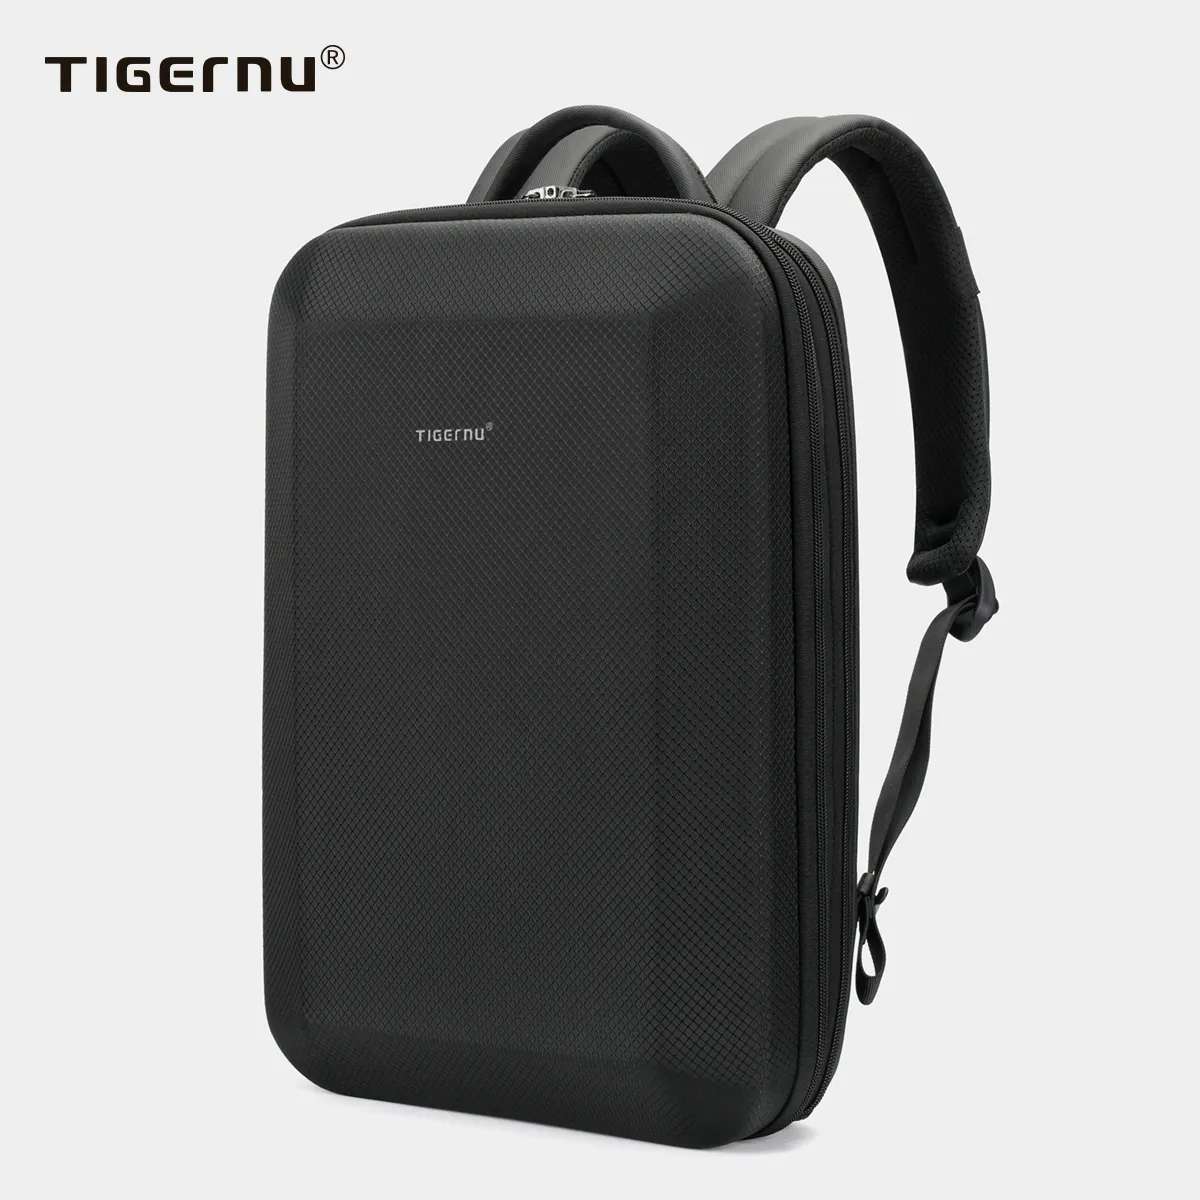 Tigernu T-B9152 Hard Shell Expandable Mochila Antirrobo Waterproof Man Bag School Bags Outdoor Man Travel Laptop Backpack